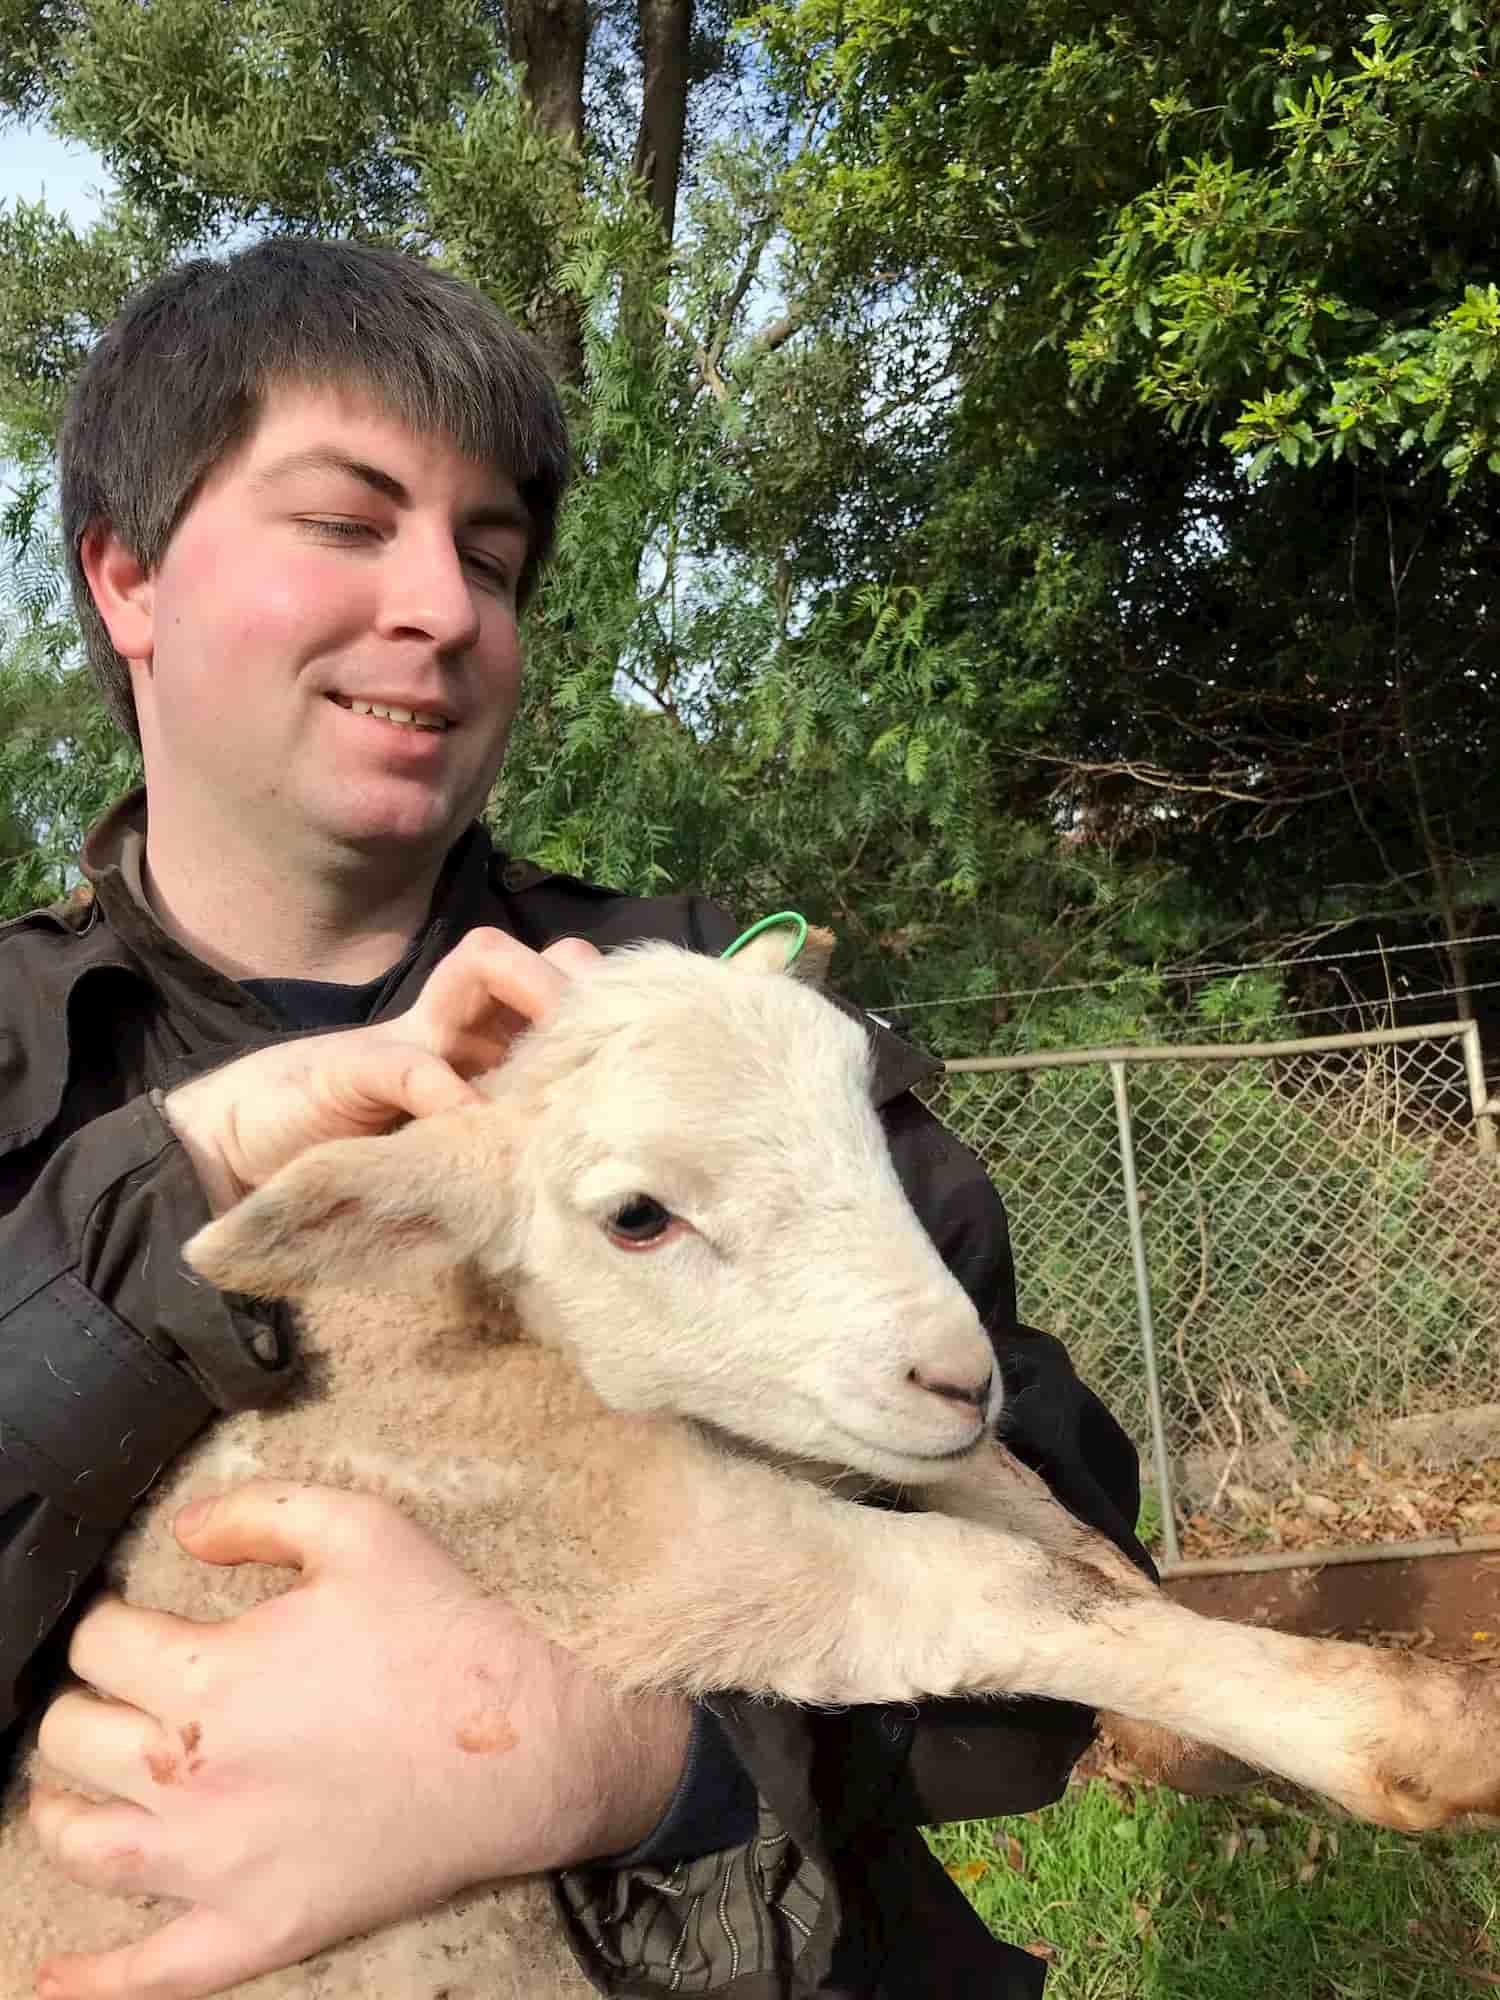 Dr Ben Dodds with pet lamb in front of a garden